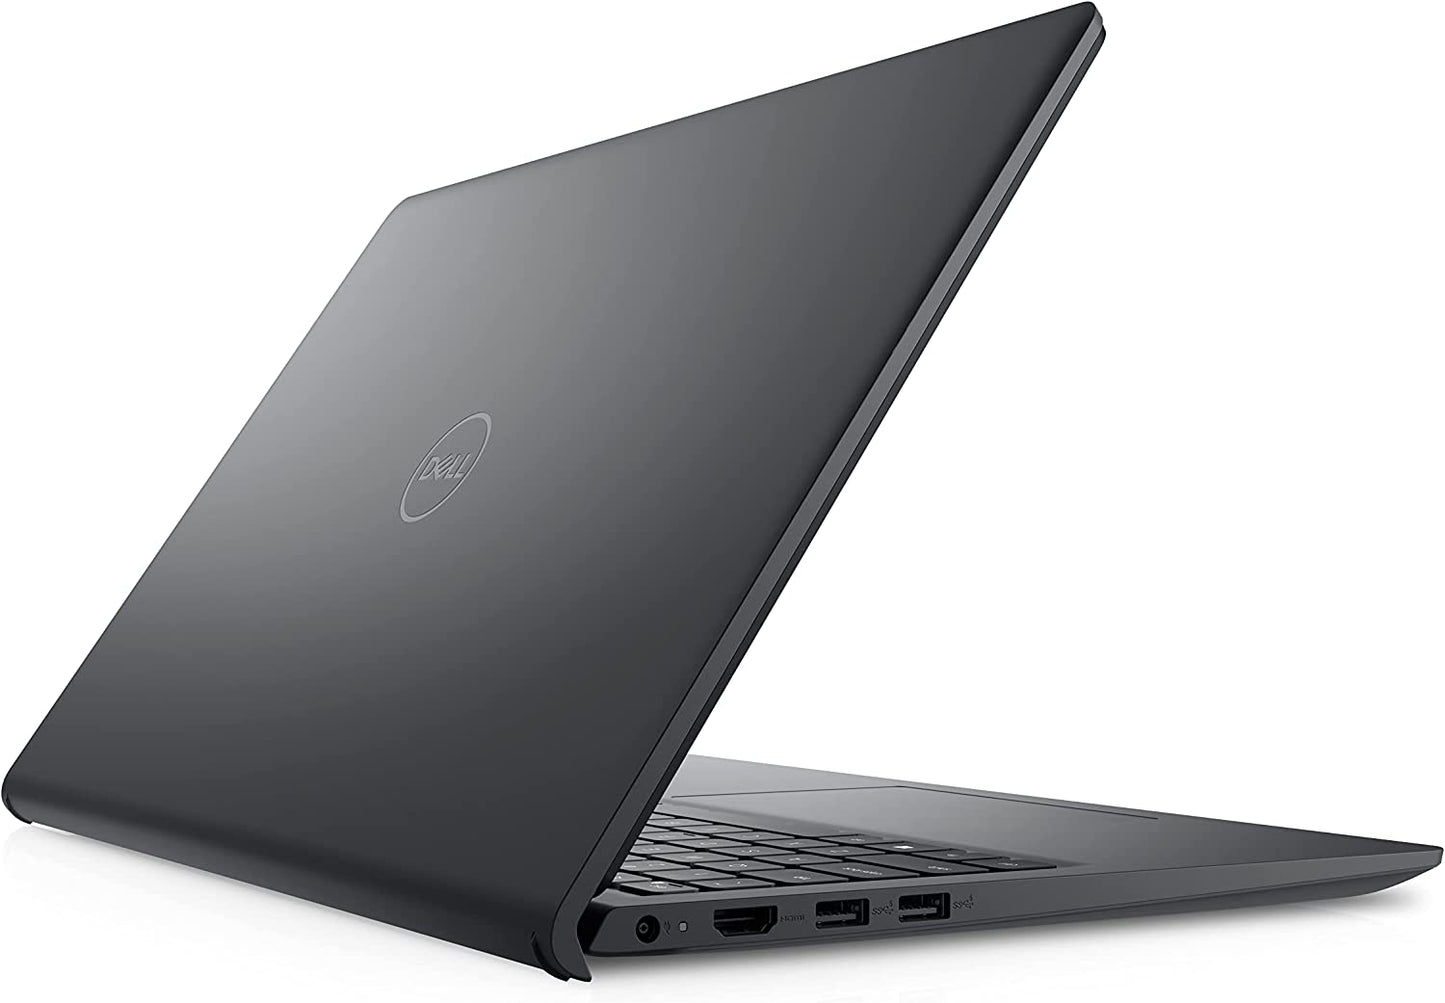 Laptop Dell Inspiron 15 3511 2022, Pantalla Táctil FHD 15.6", Intel Core i5-1035G1, 16GB Ram, 1TB PCIe NVMe M.2 SSD